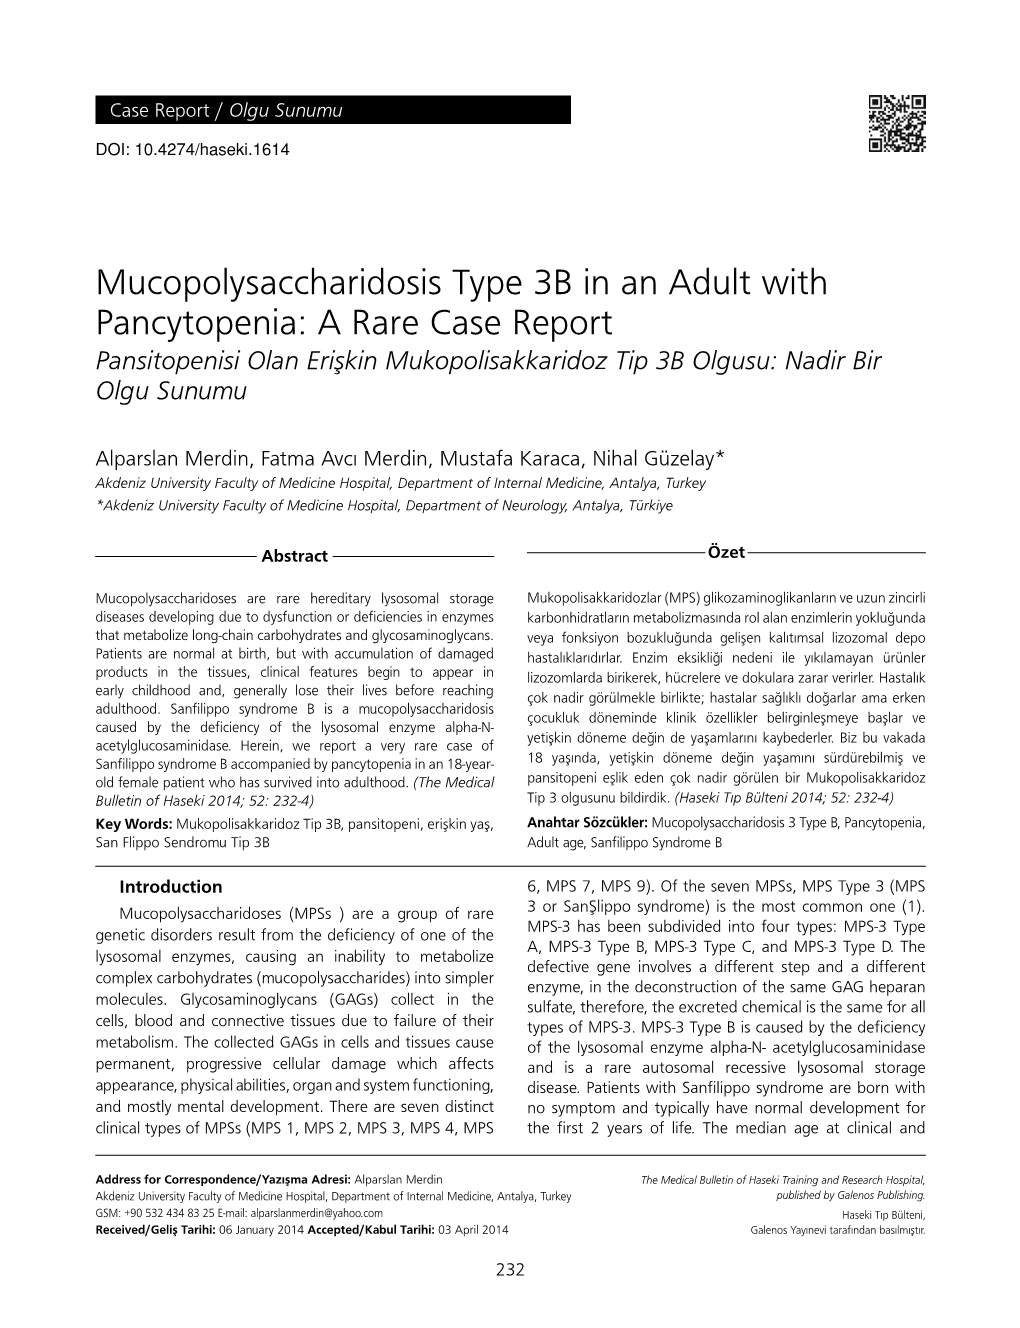 Mucopolysaccharidosis Type 3B in an Adult with Pancytopenia: a Rare Case Report Pansitopenisi Olan Erişkin Mukopolisakkaridoz Tip 3B Olgusu: Nadir Bir Olgu Sunumu